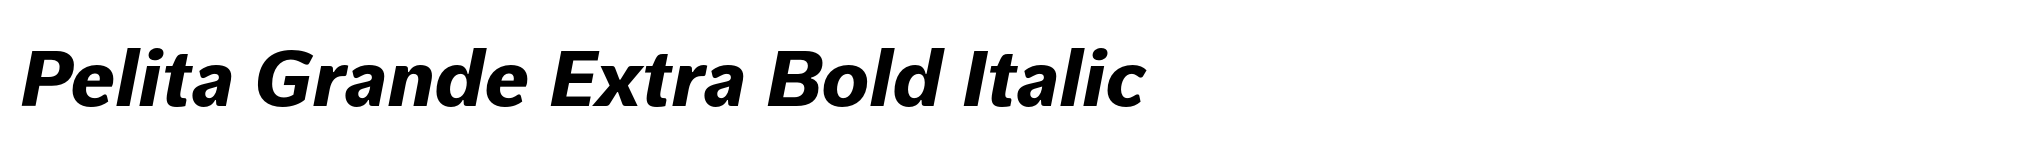 Pelita Grande Extra Bold Italic image